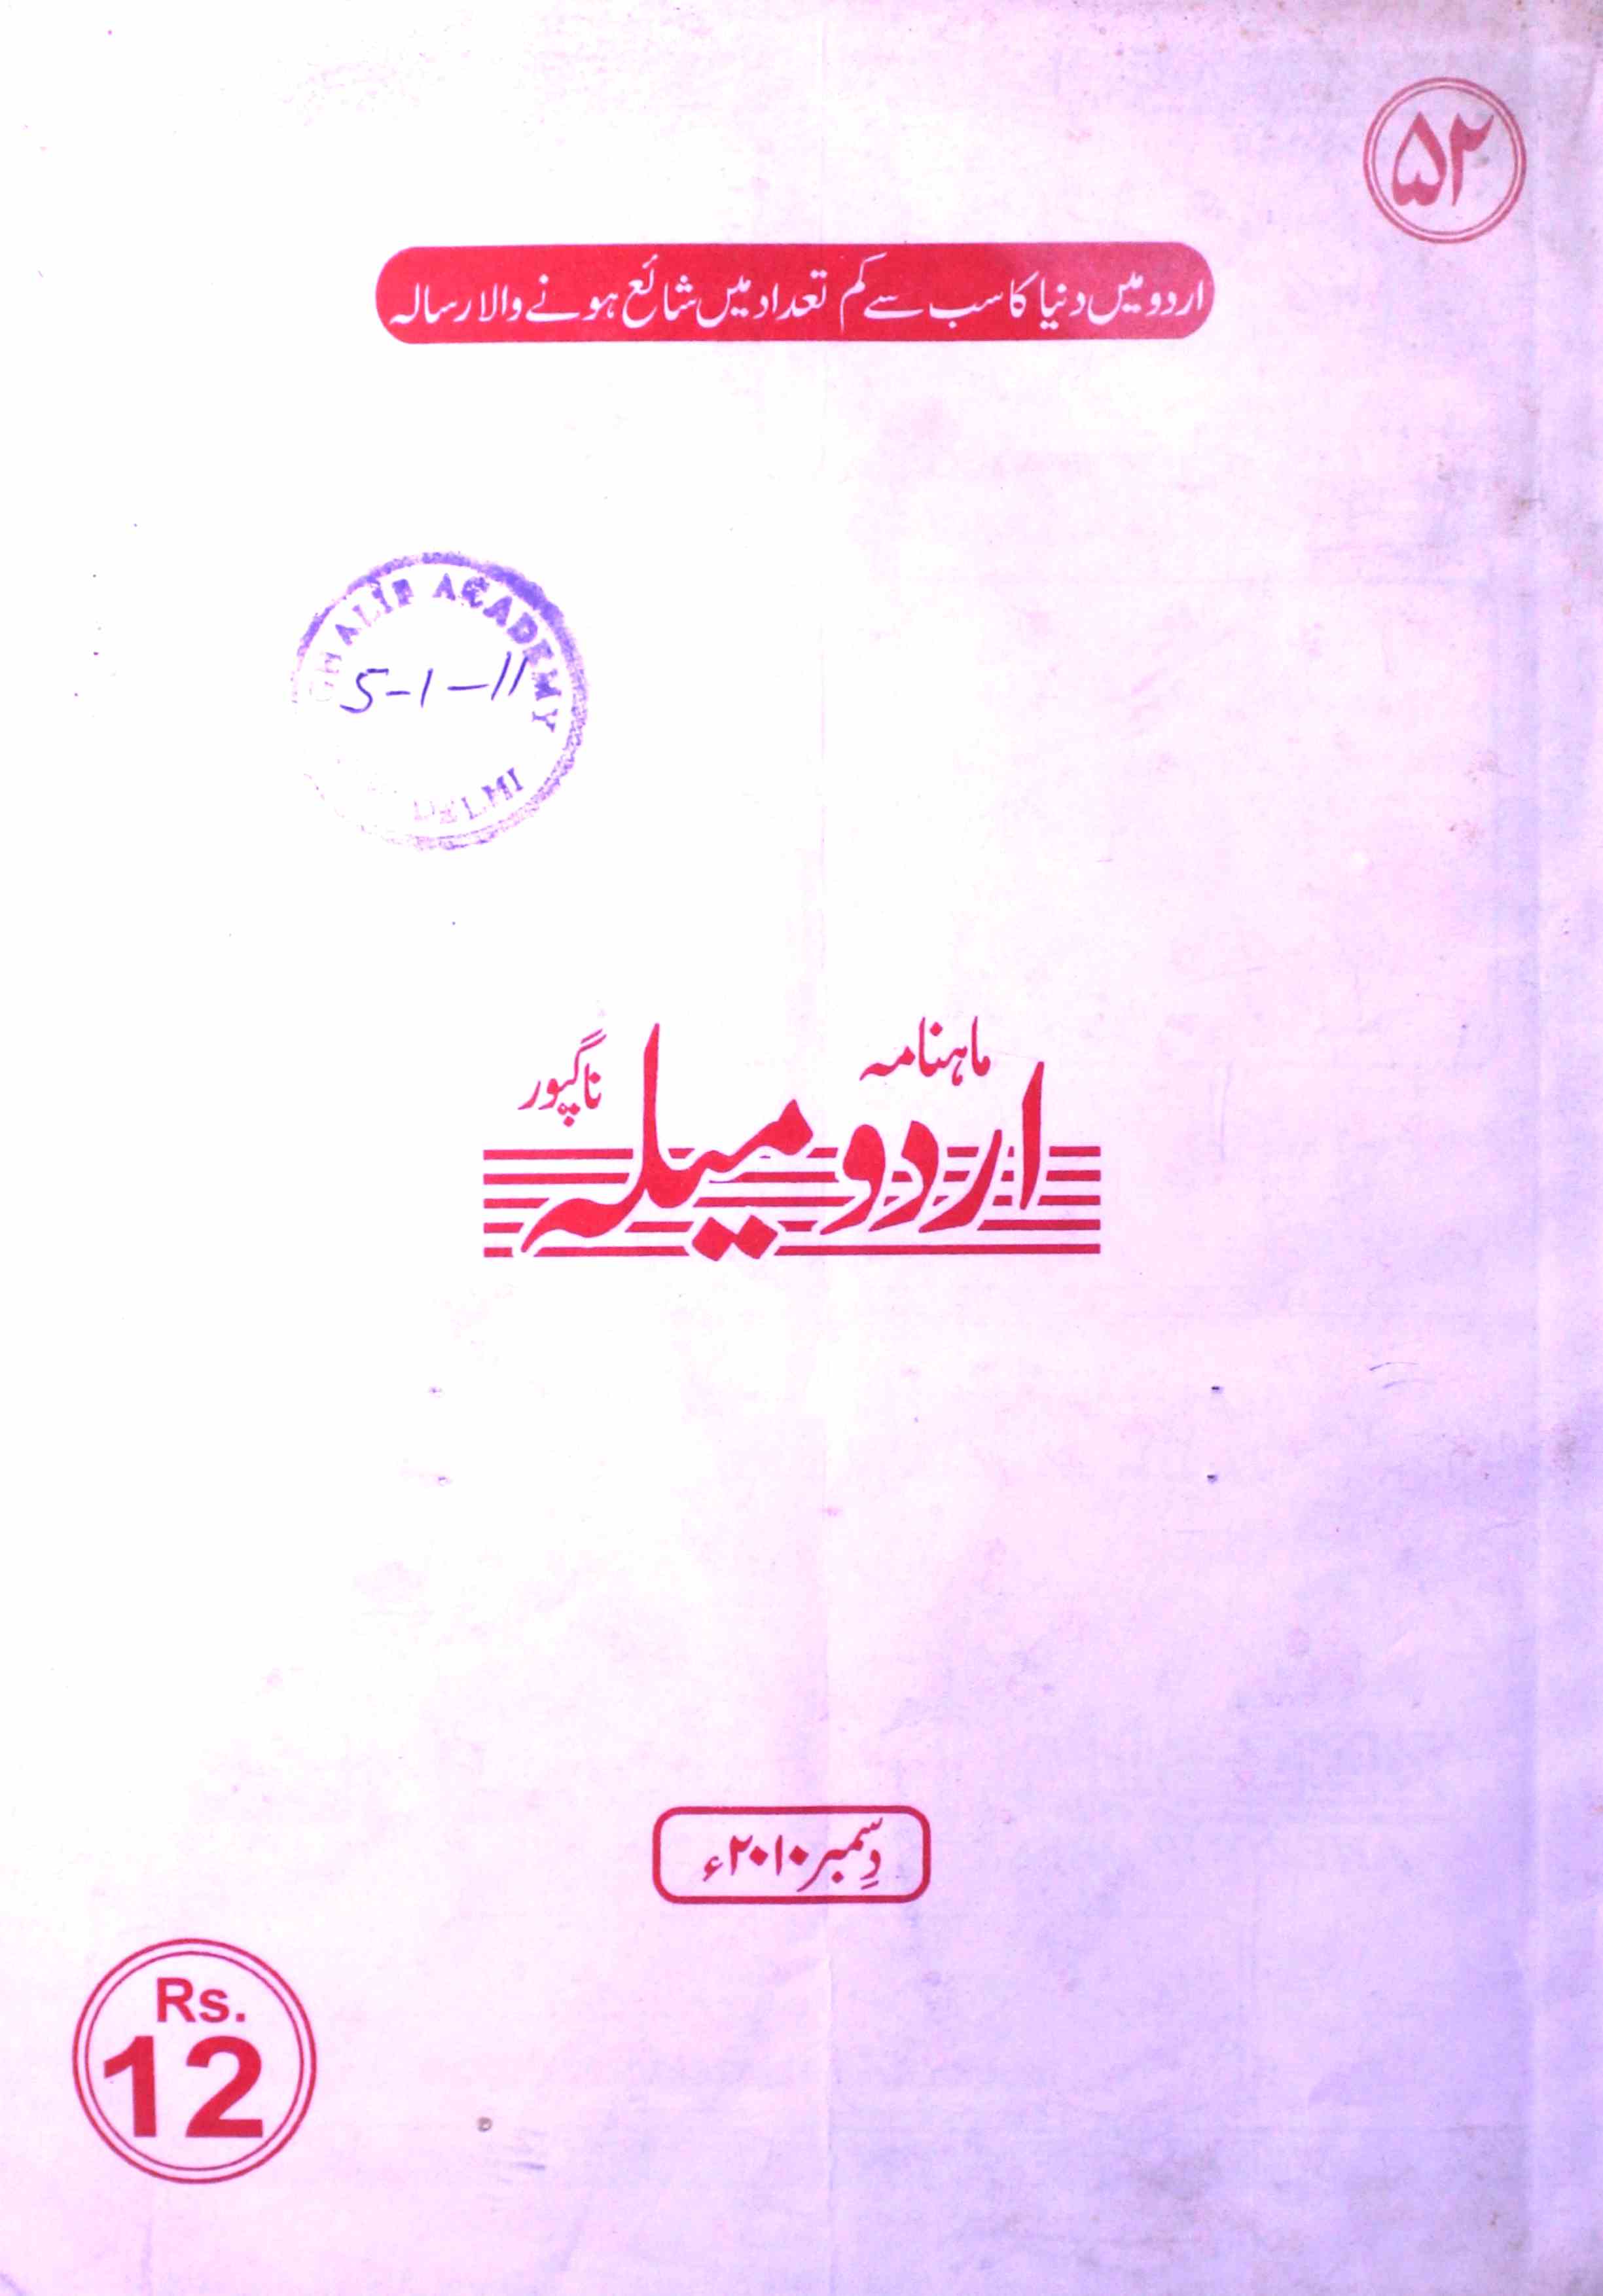 Urdu Mela Shumara-52-Shumara Number-052